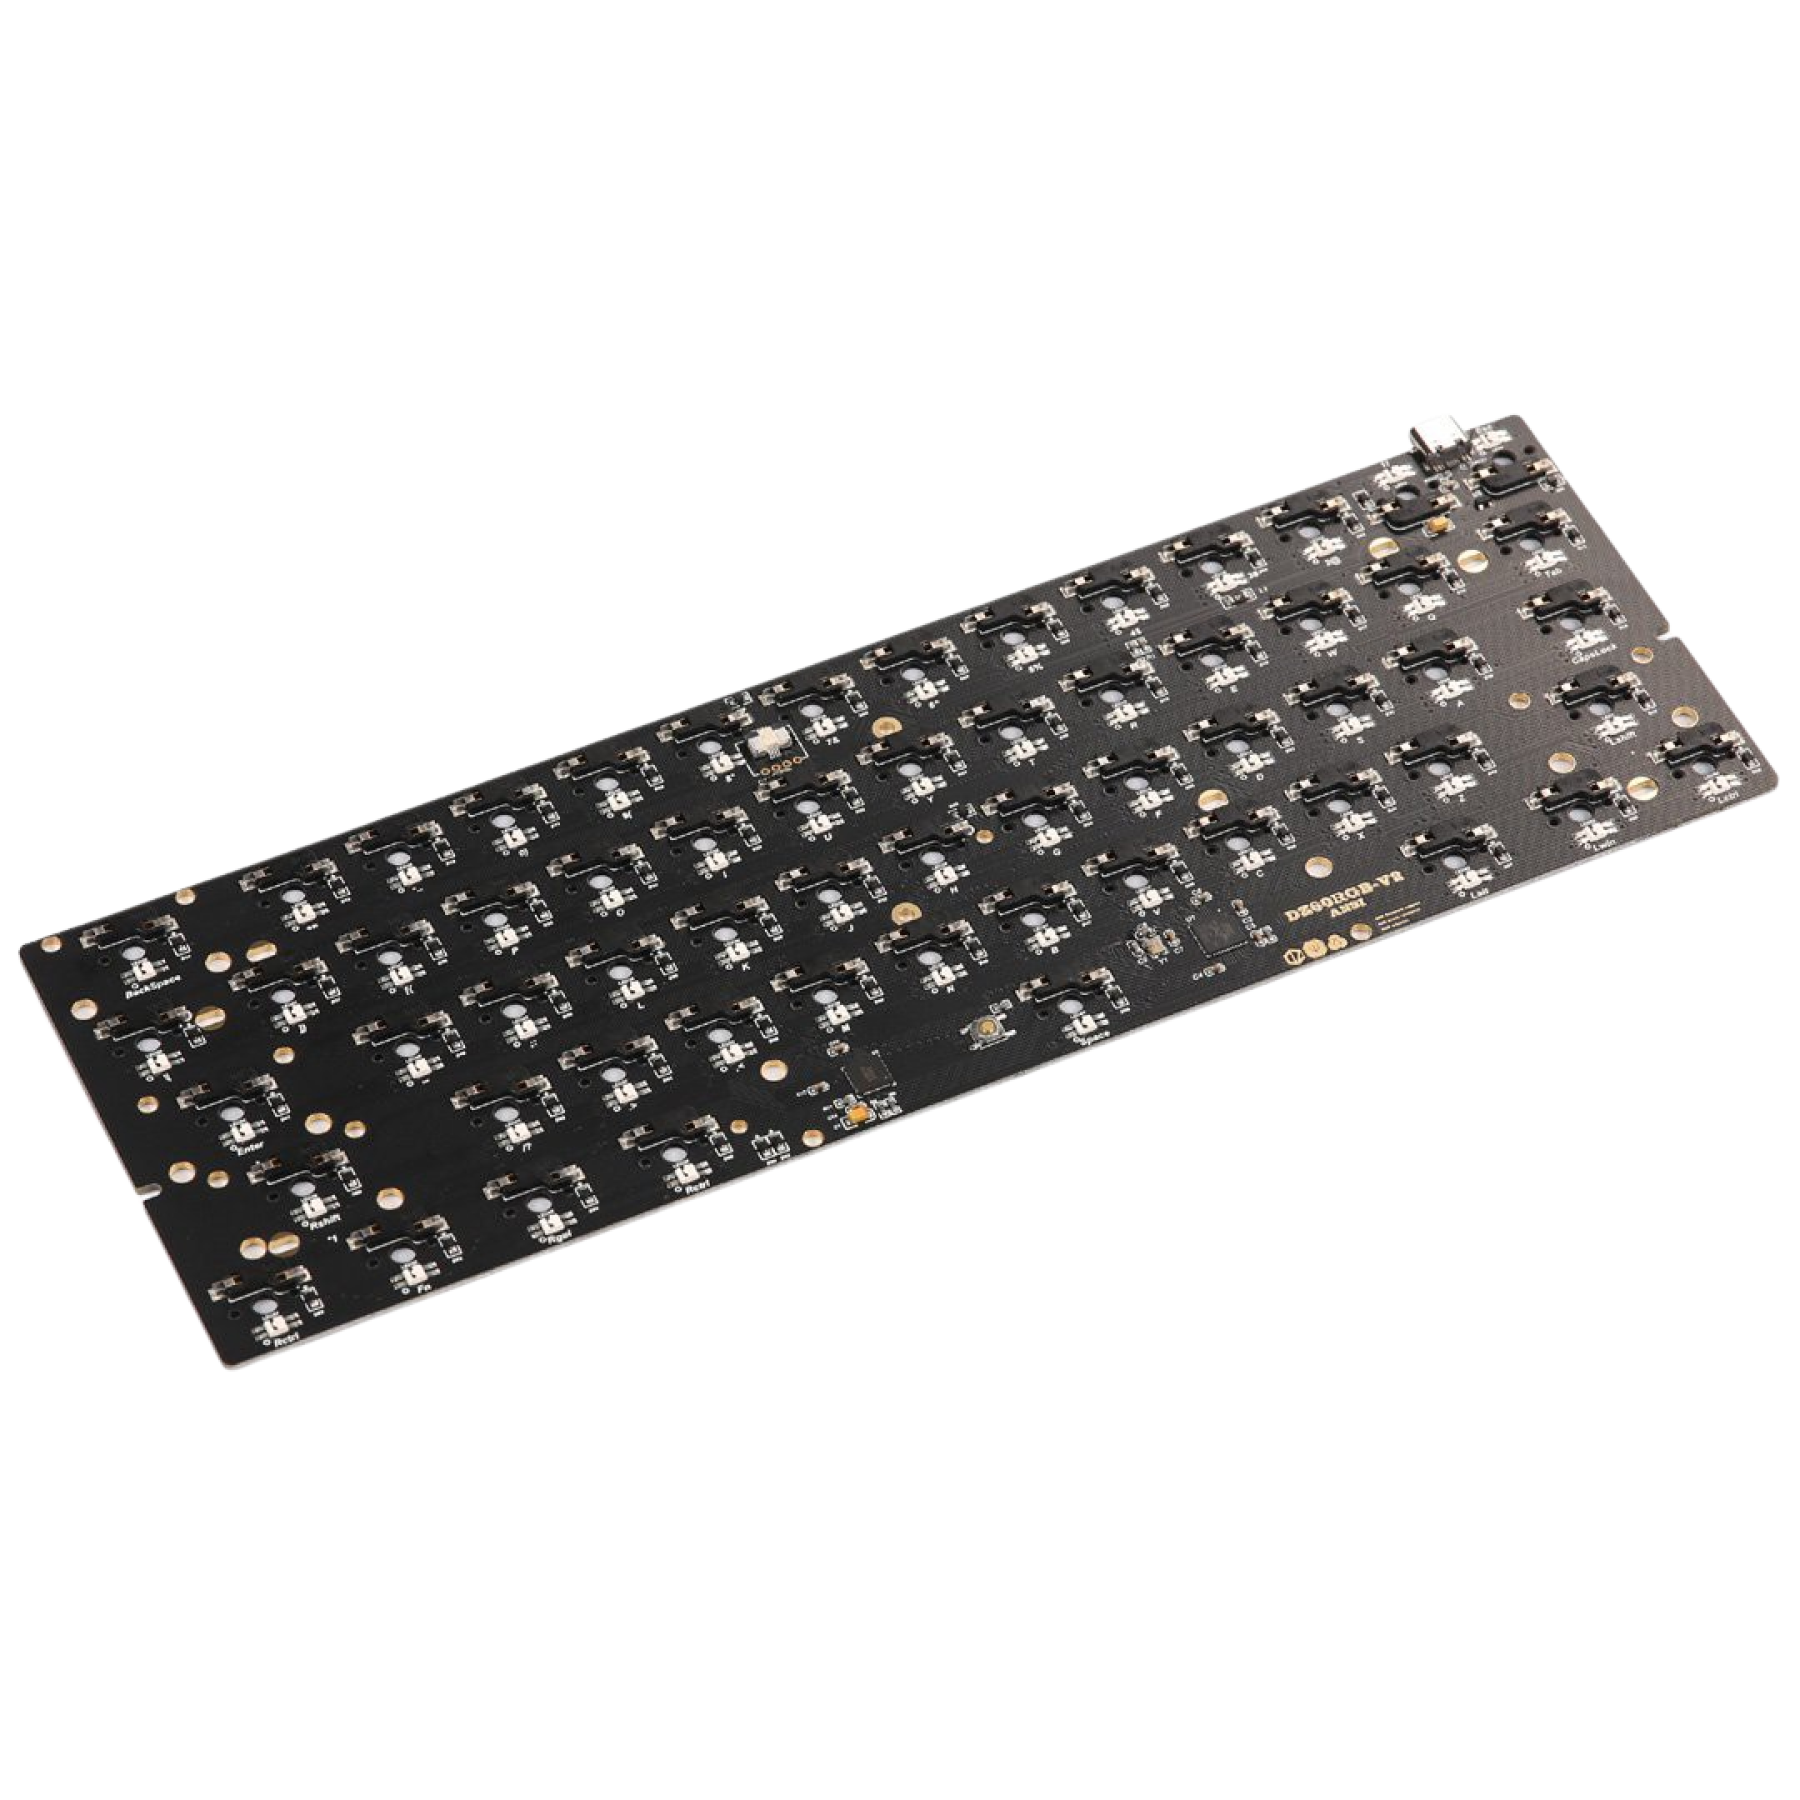 60% DZ60RGB-ANSI v2 Hot Swap Mechanical Keyboard PCB